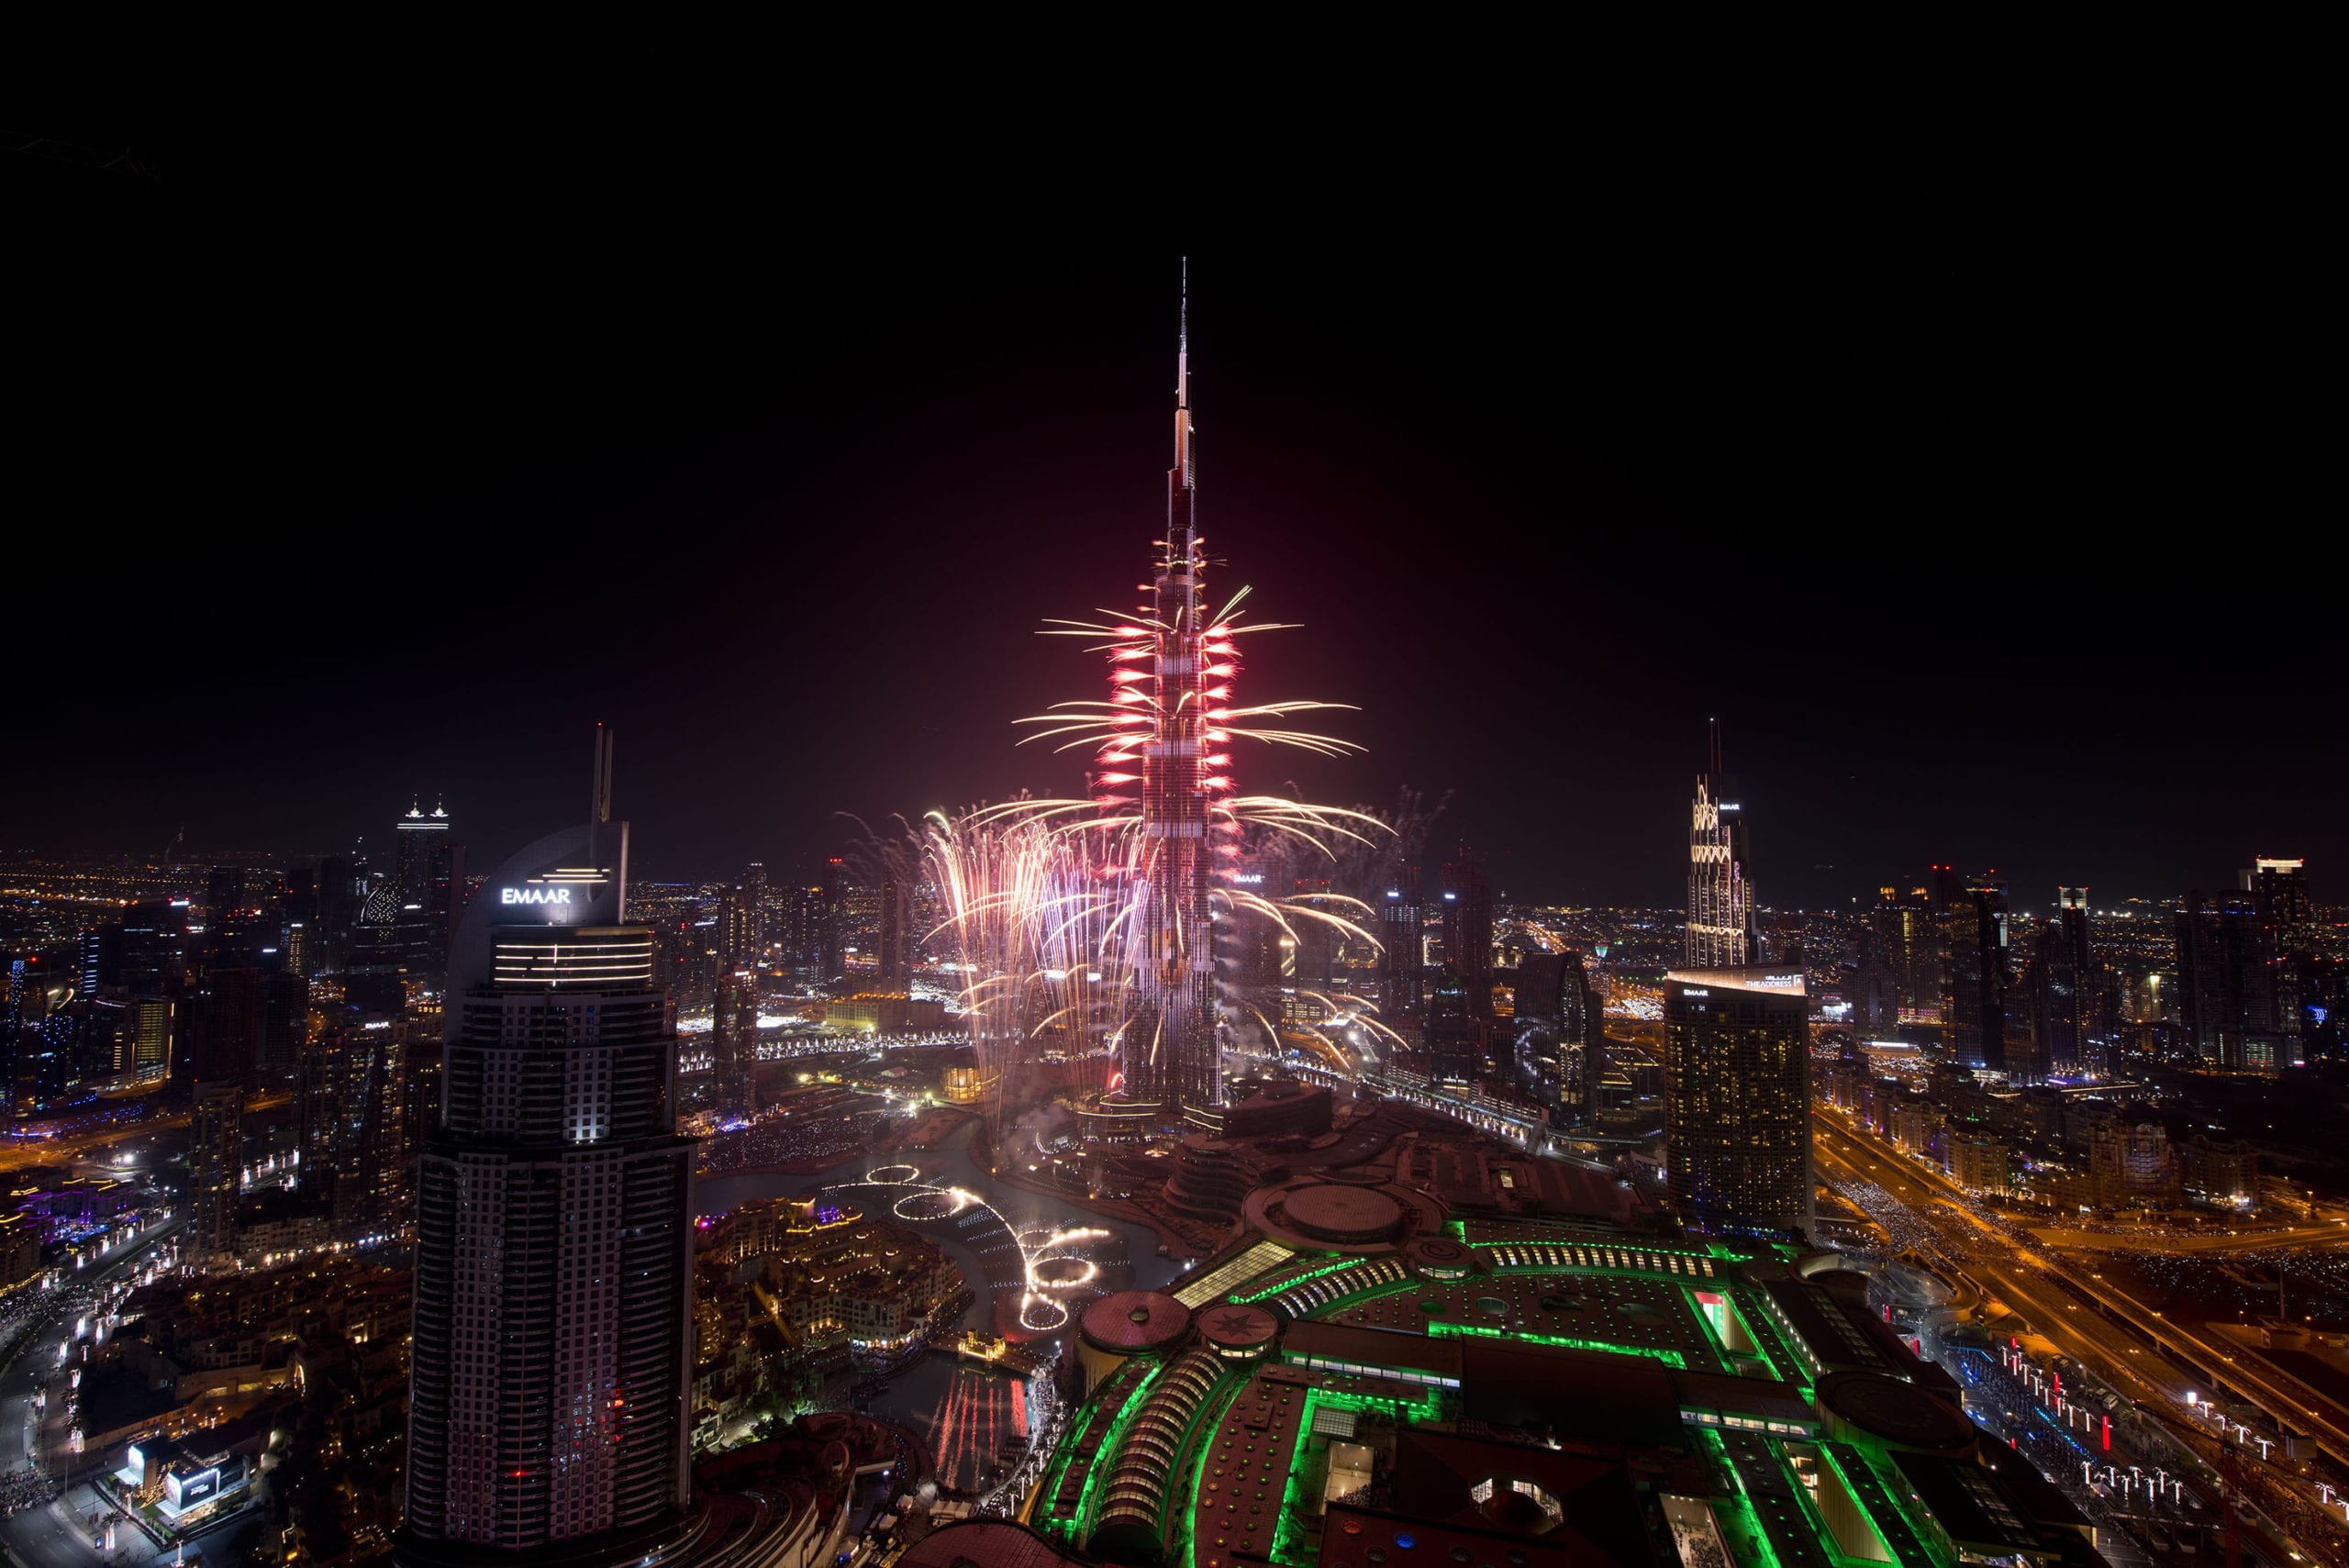 Dubai prepares for tourism rebound in 2021